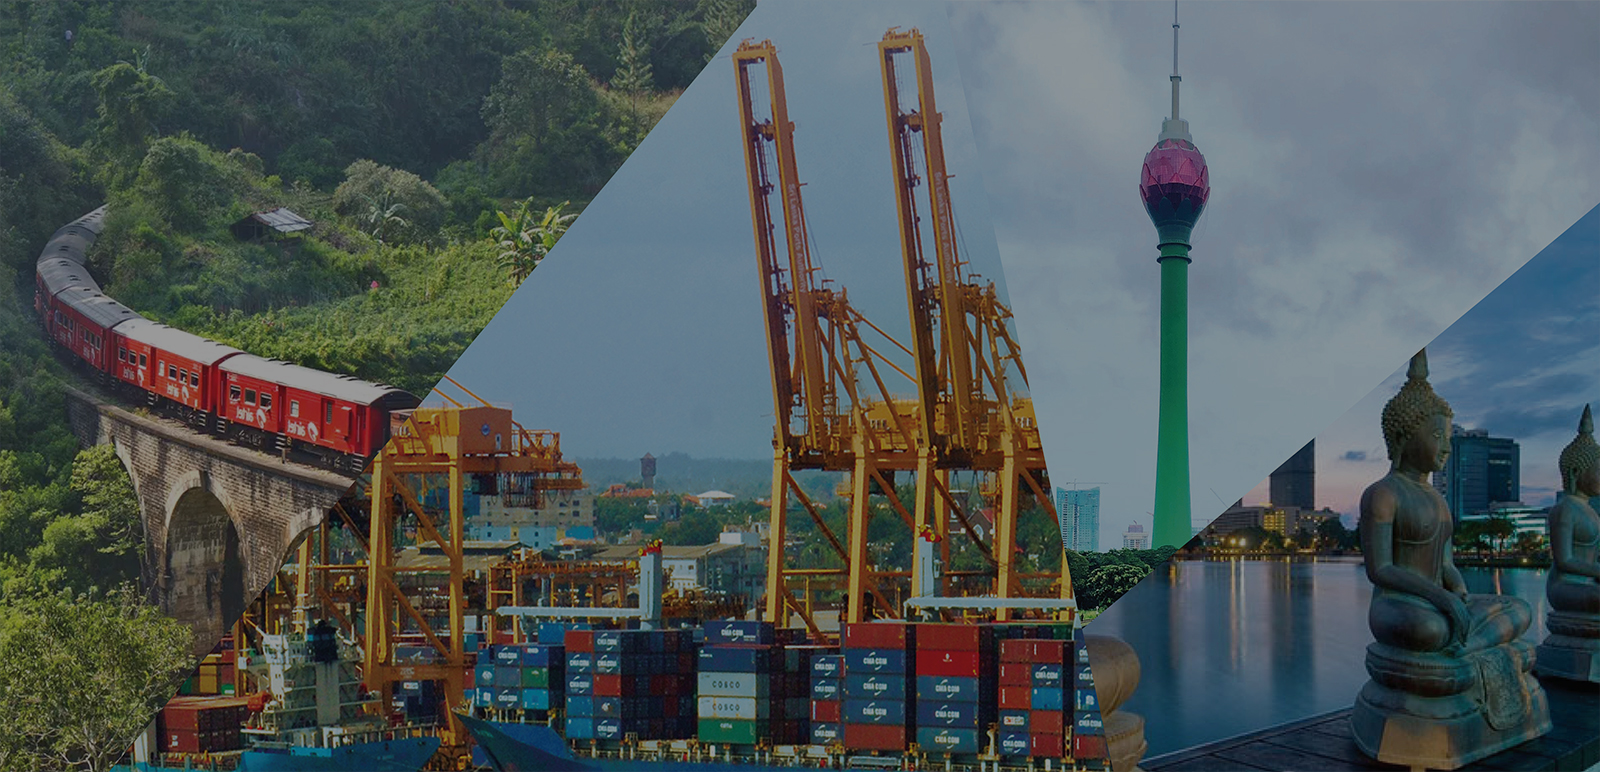 The Conference Company <br> Await - Colombo International Maritime & Logistics Conference <br> 12 - 13 SEPTEMBER 2022, Colombo, Sri Lanka 